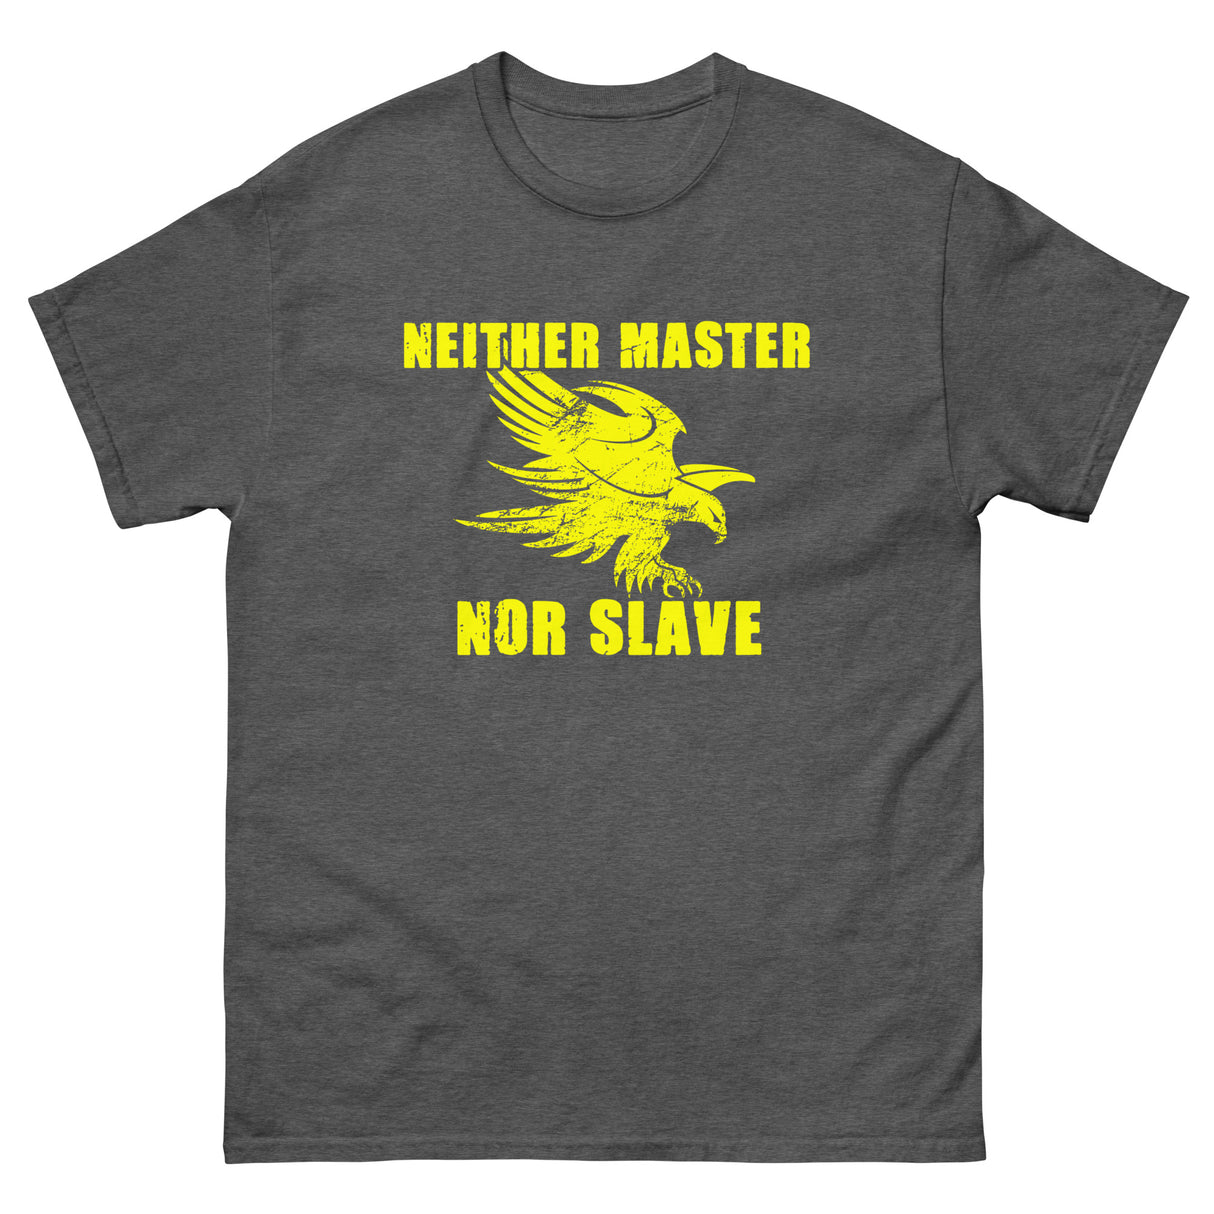 Neither Master Nor Slave Heavy Cotton Shirt - Libertarian Country